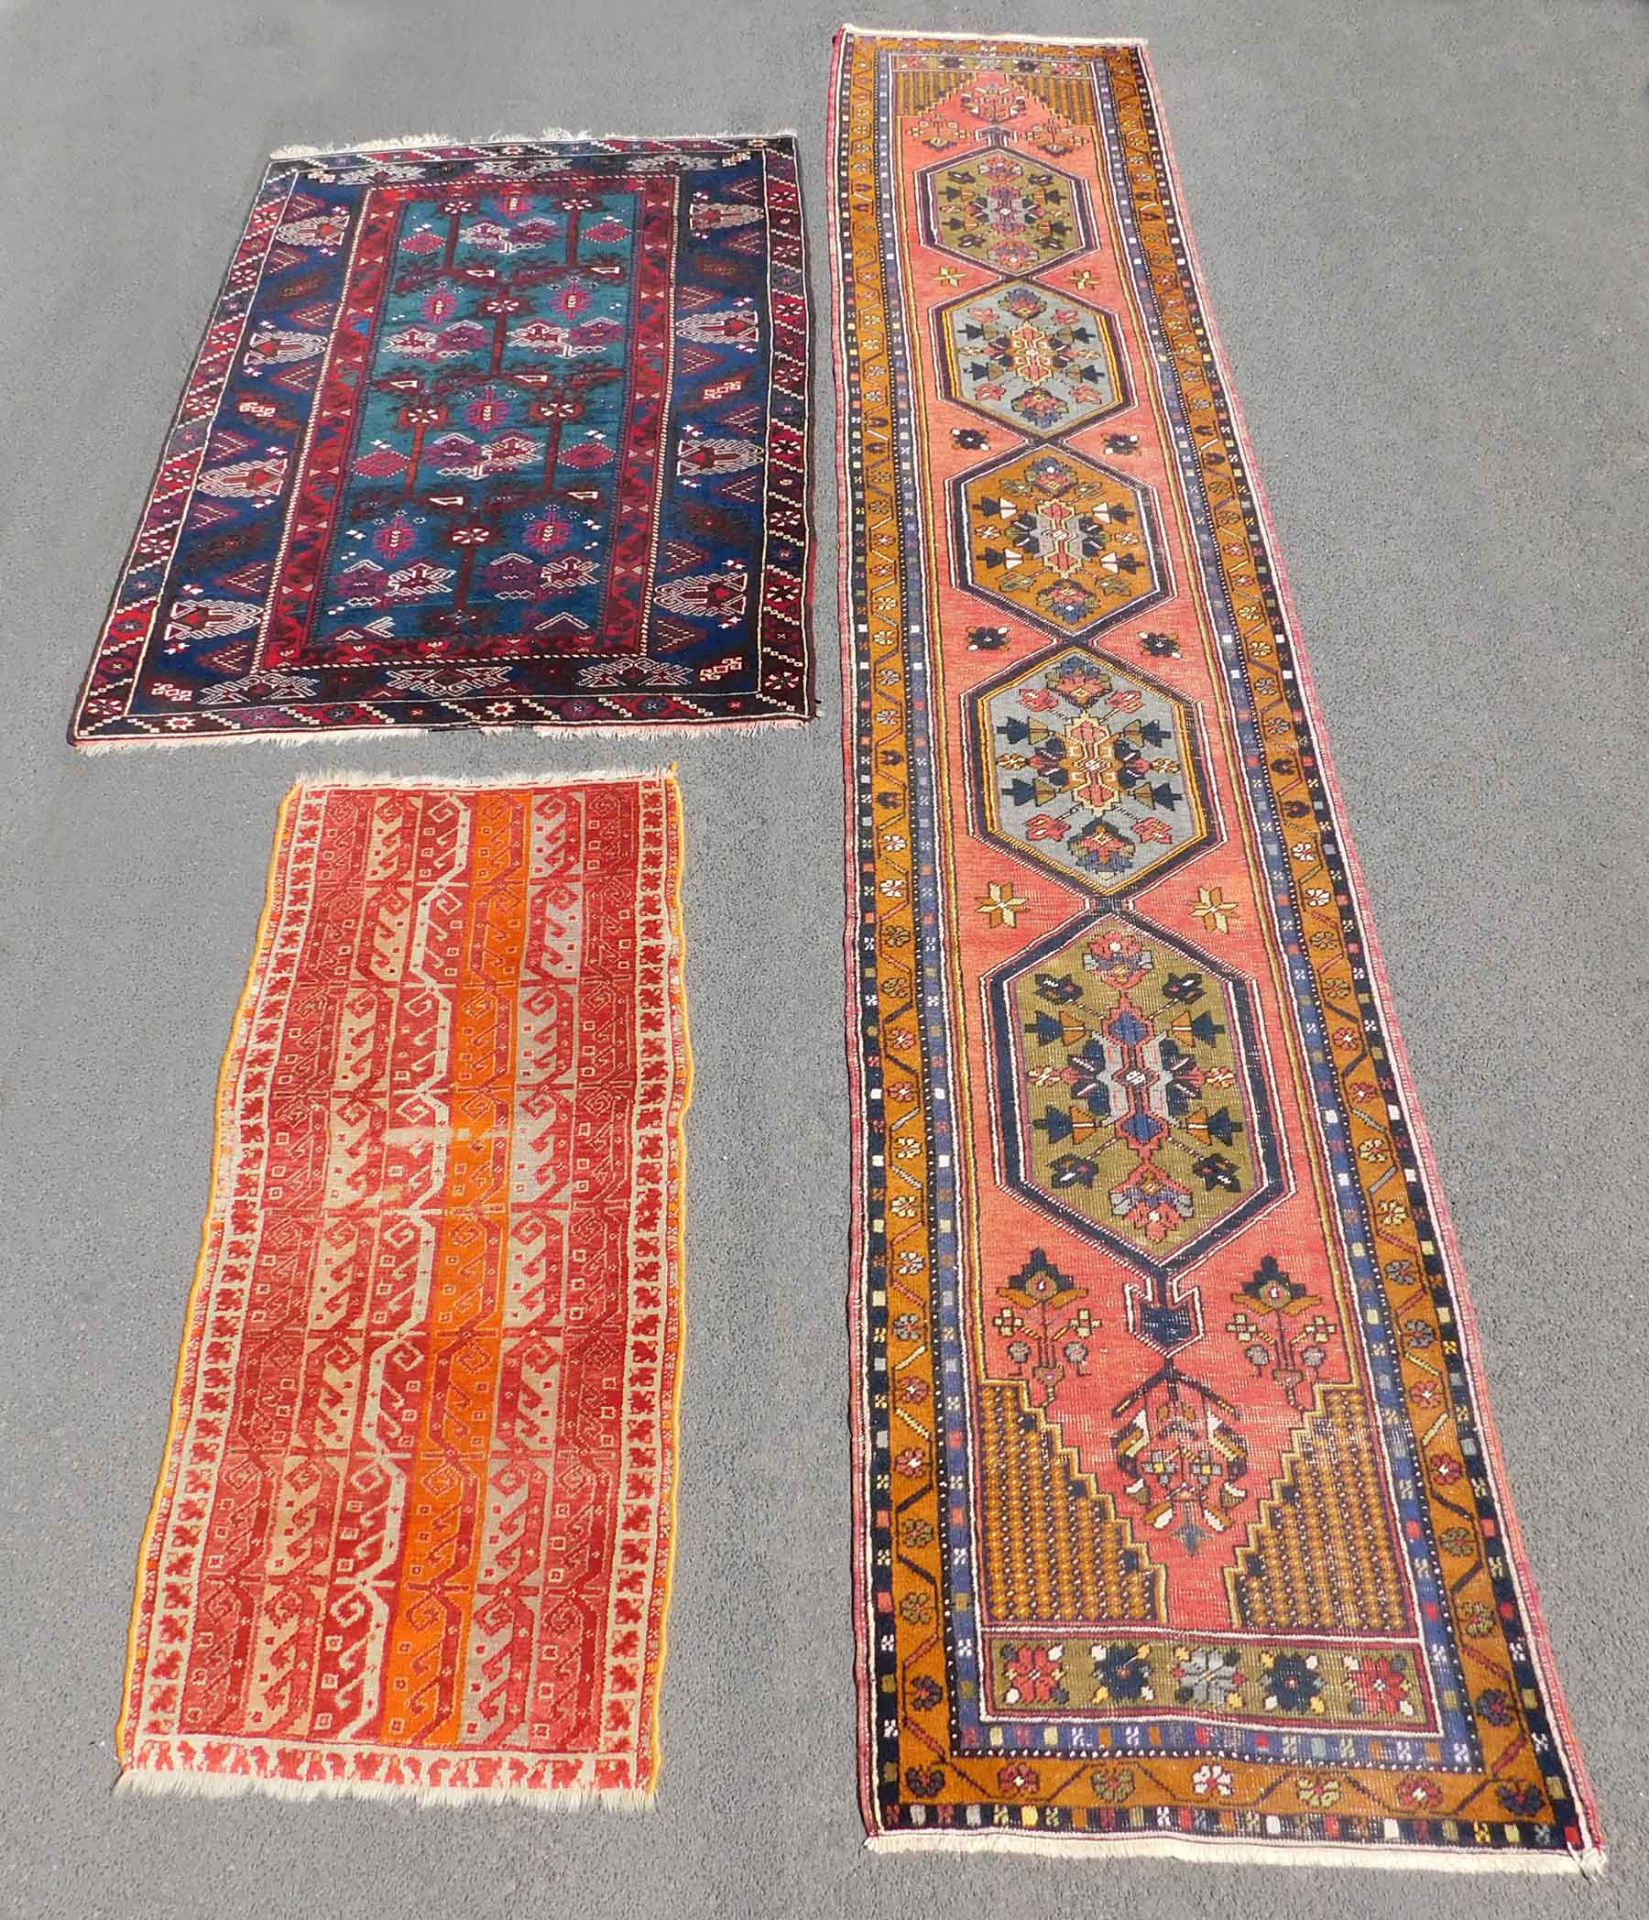 3 Anatol carpets. Knotted by hand. Wool on wool. Turkey.Kirsehir Yastik, 143 cm x 62 cm, antique,